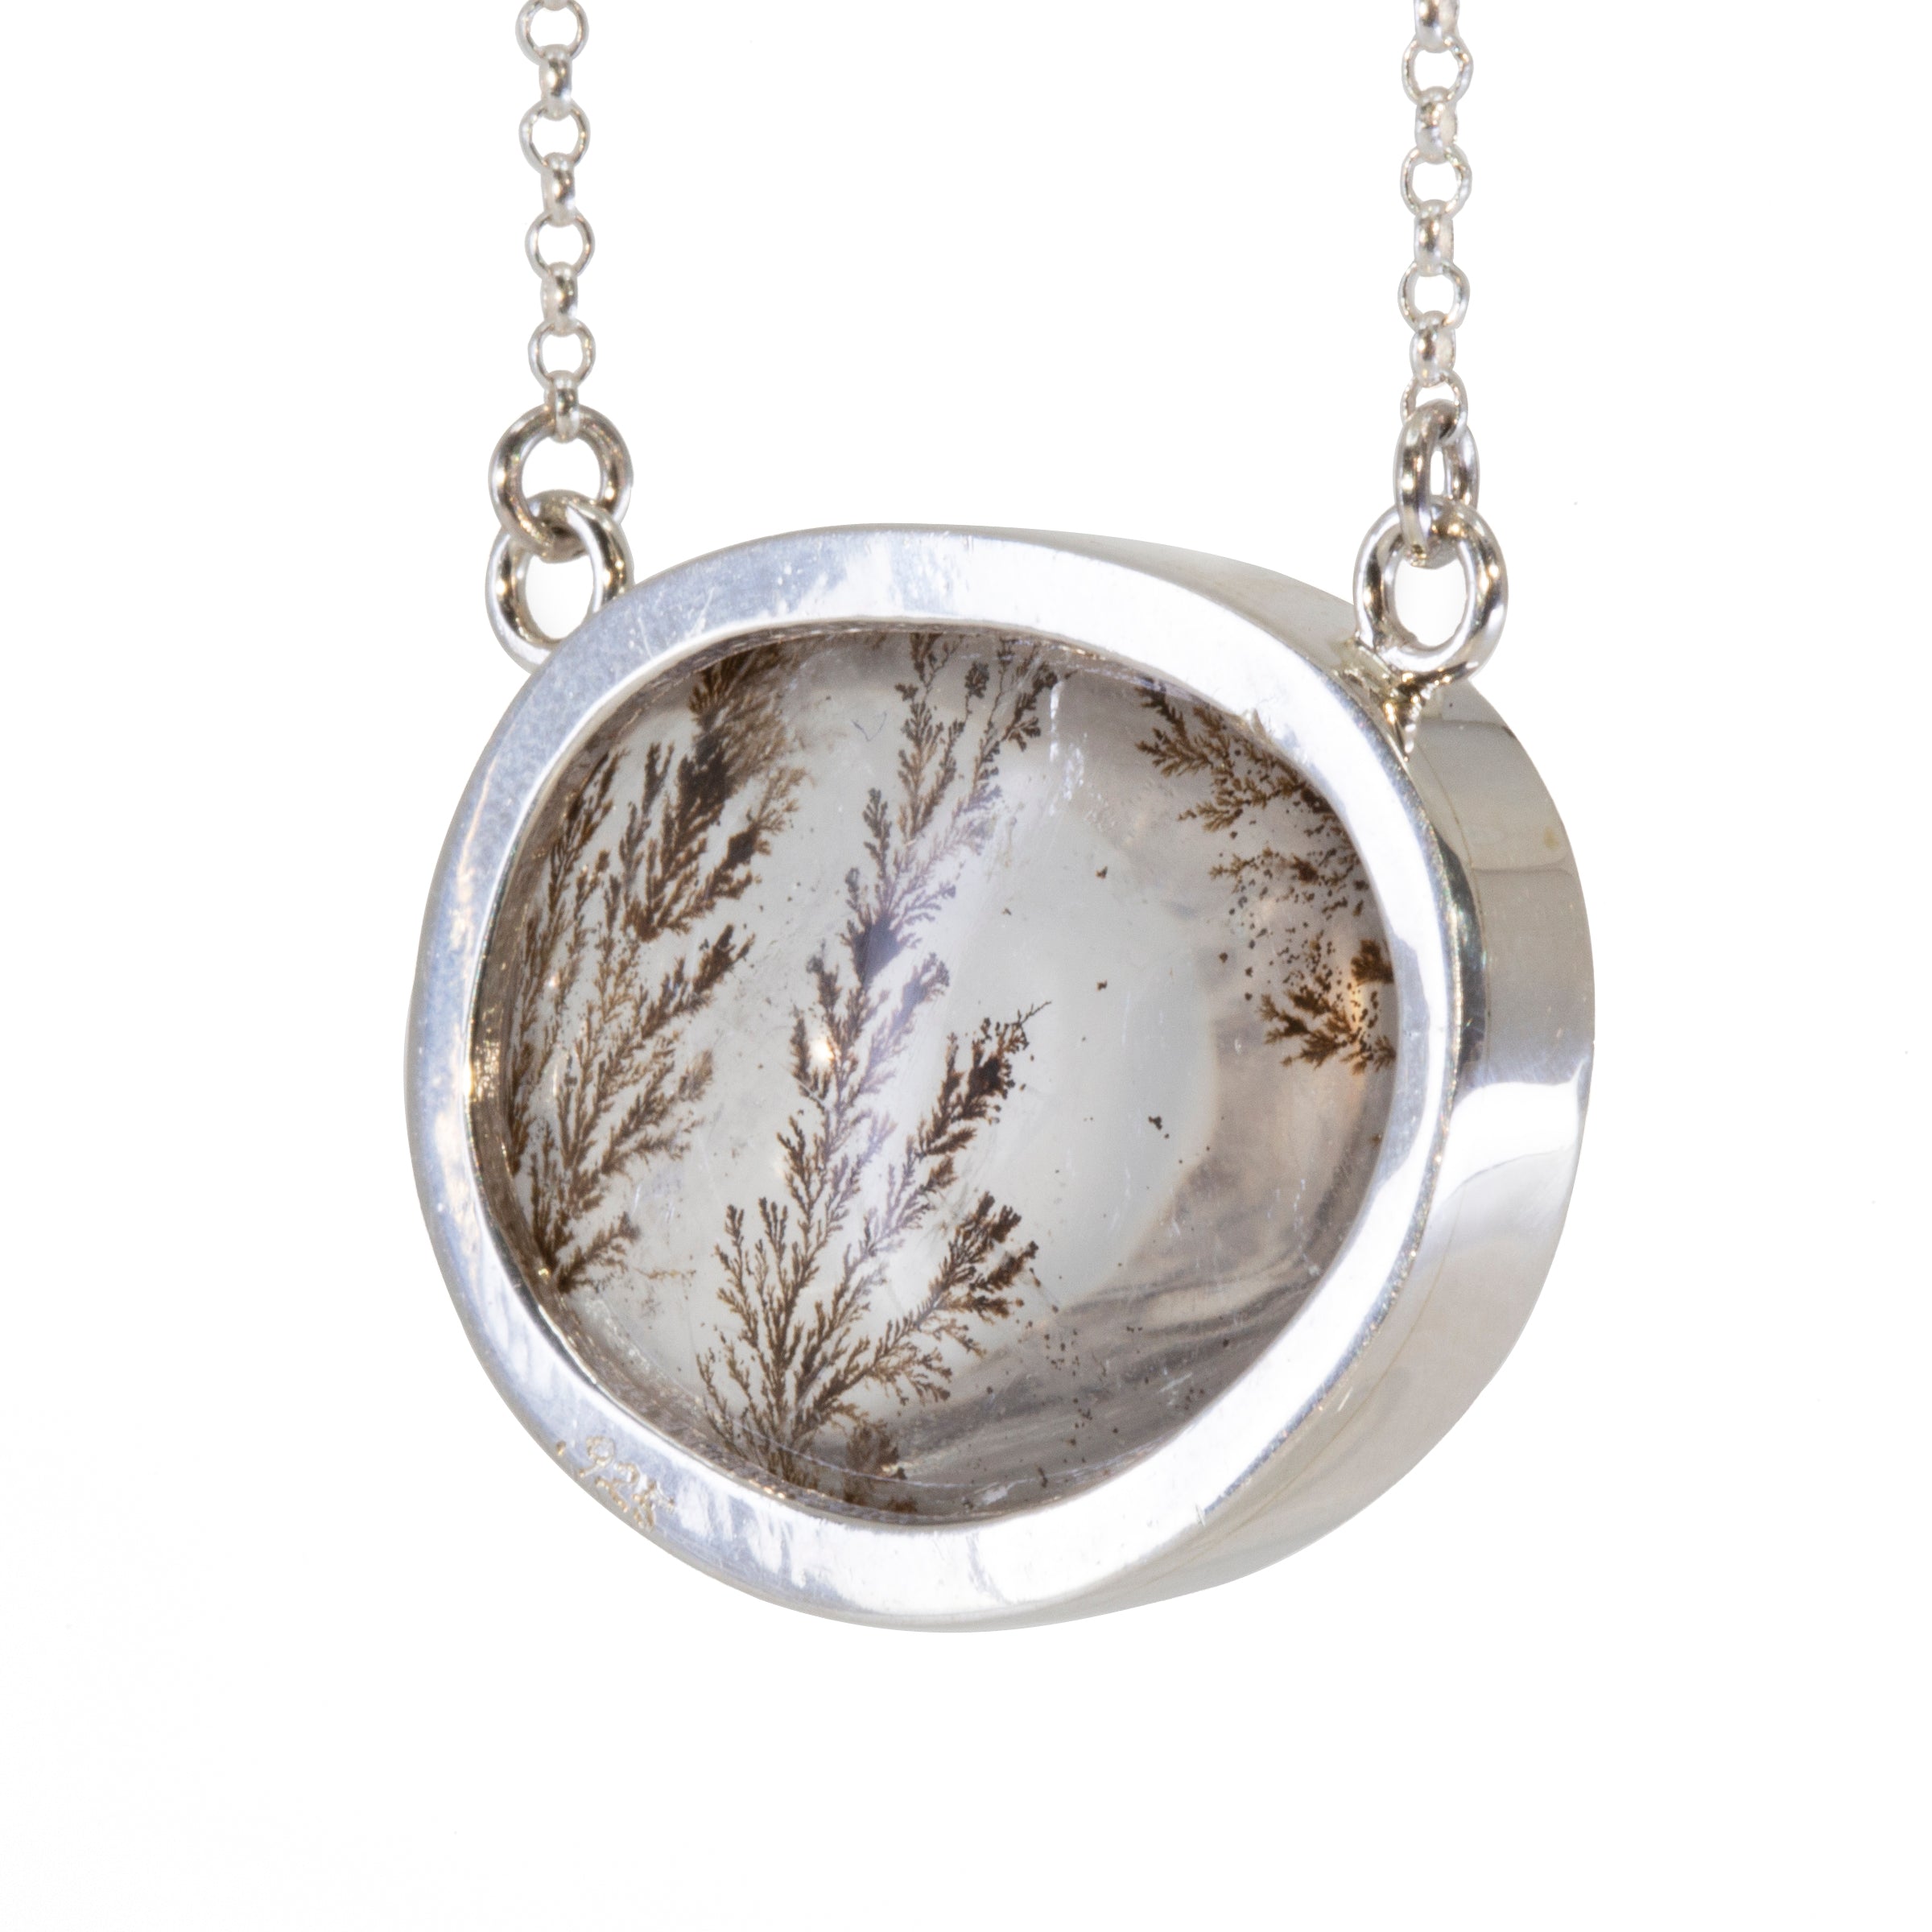 Dendritic Quartz 31 carat Handcrafted Sterling Silver Necklace - HHO-165 - Crystalarium